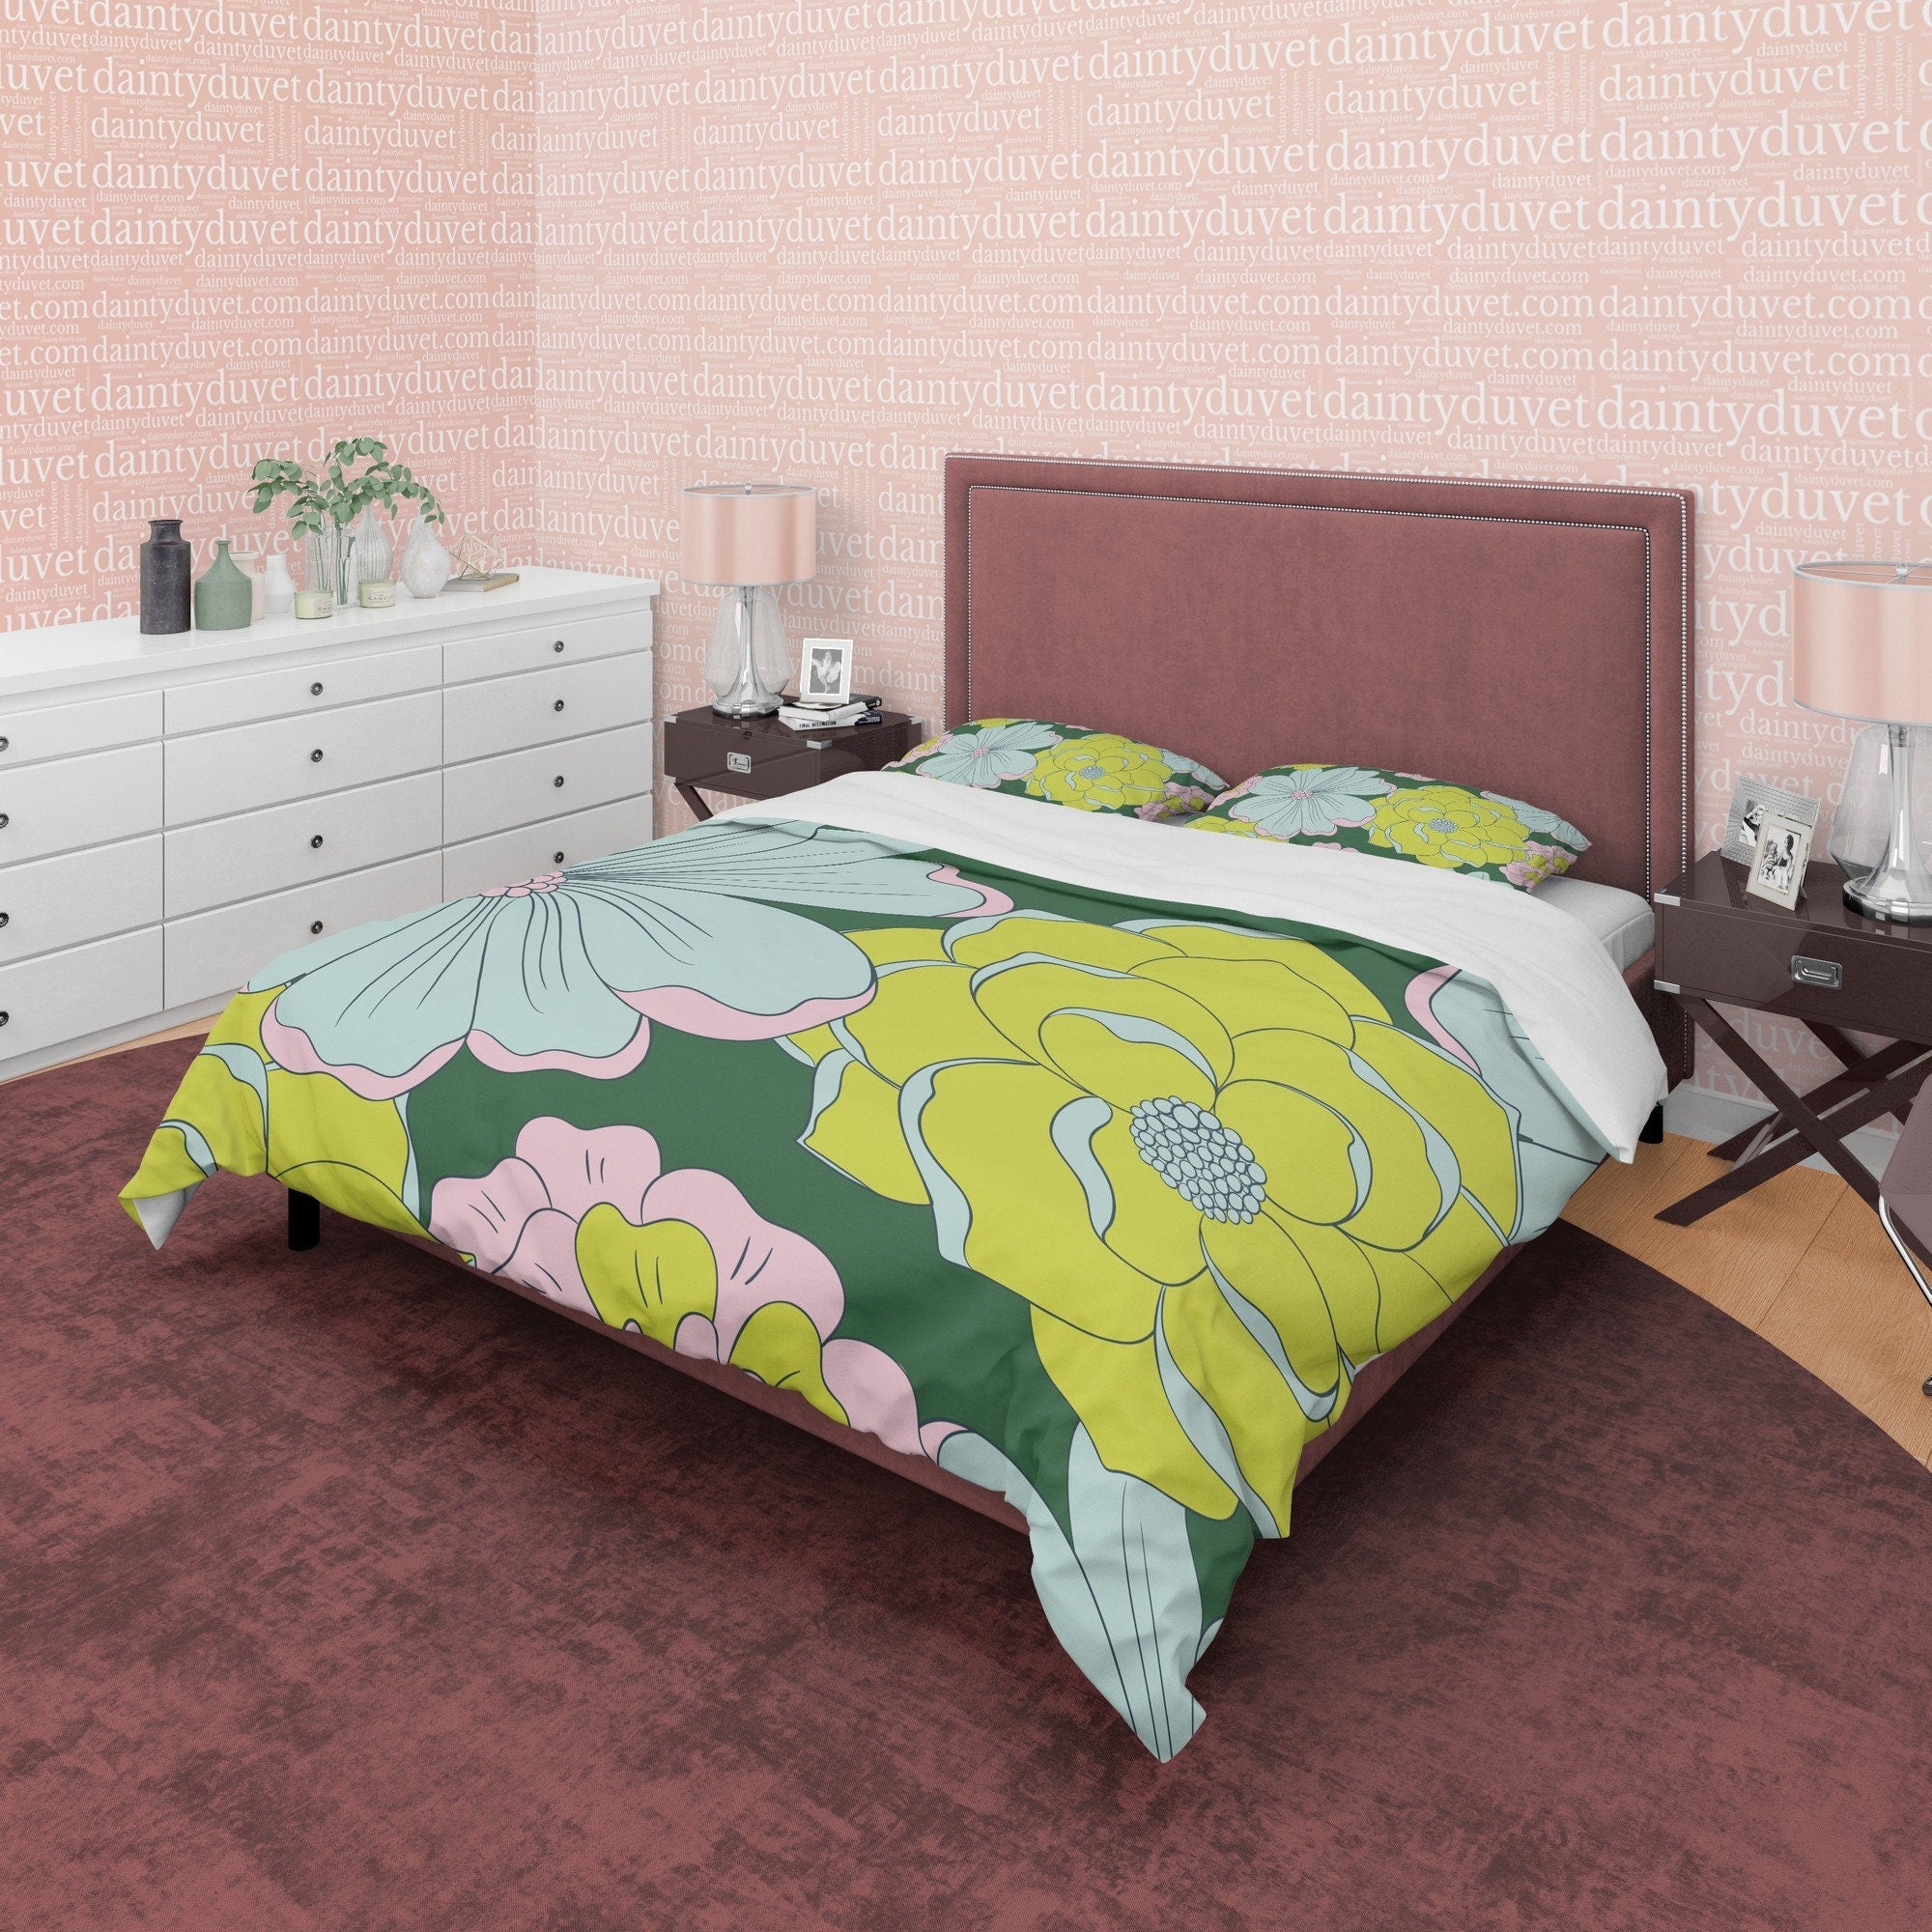 Flower Boho Bedding Colorful Duvet Cover Bohemian Bedroom Set, Floral Quilt Cover, Aesthetic Bedspread, Bright Colors Unique Room Decor